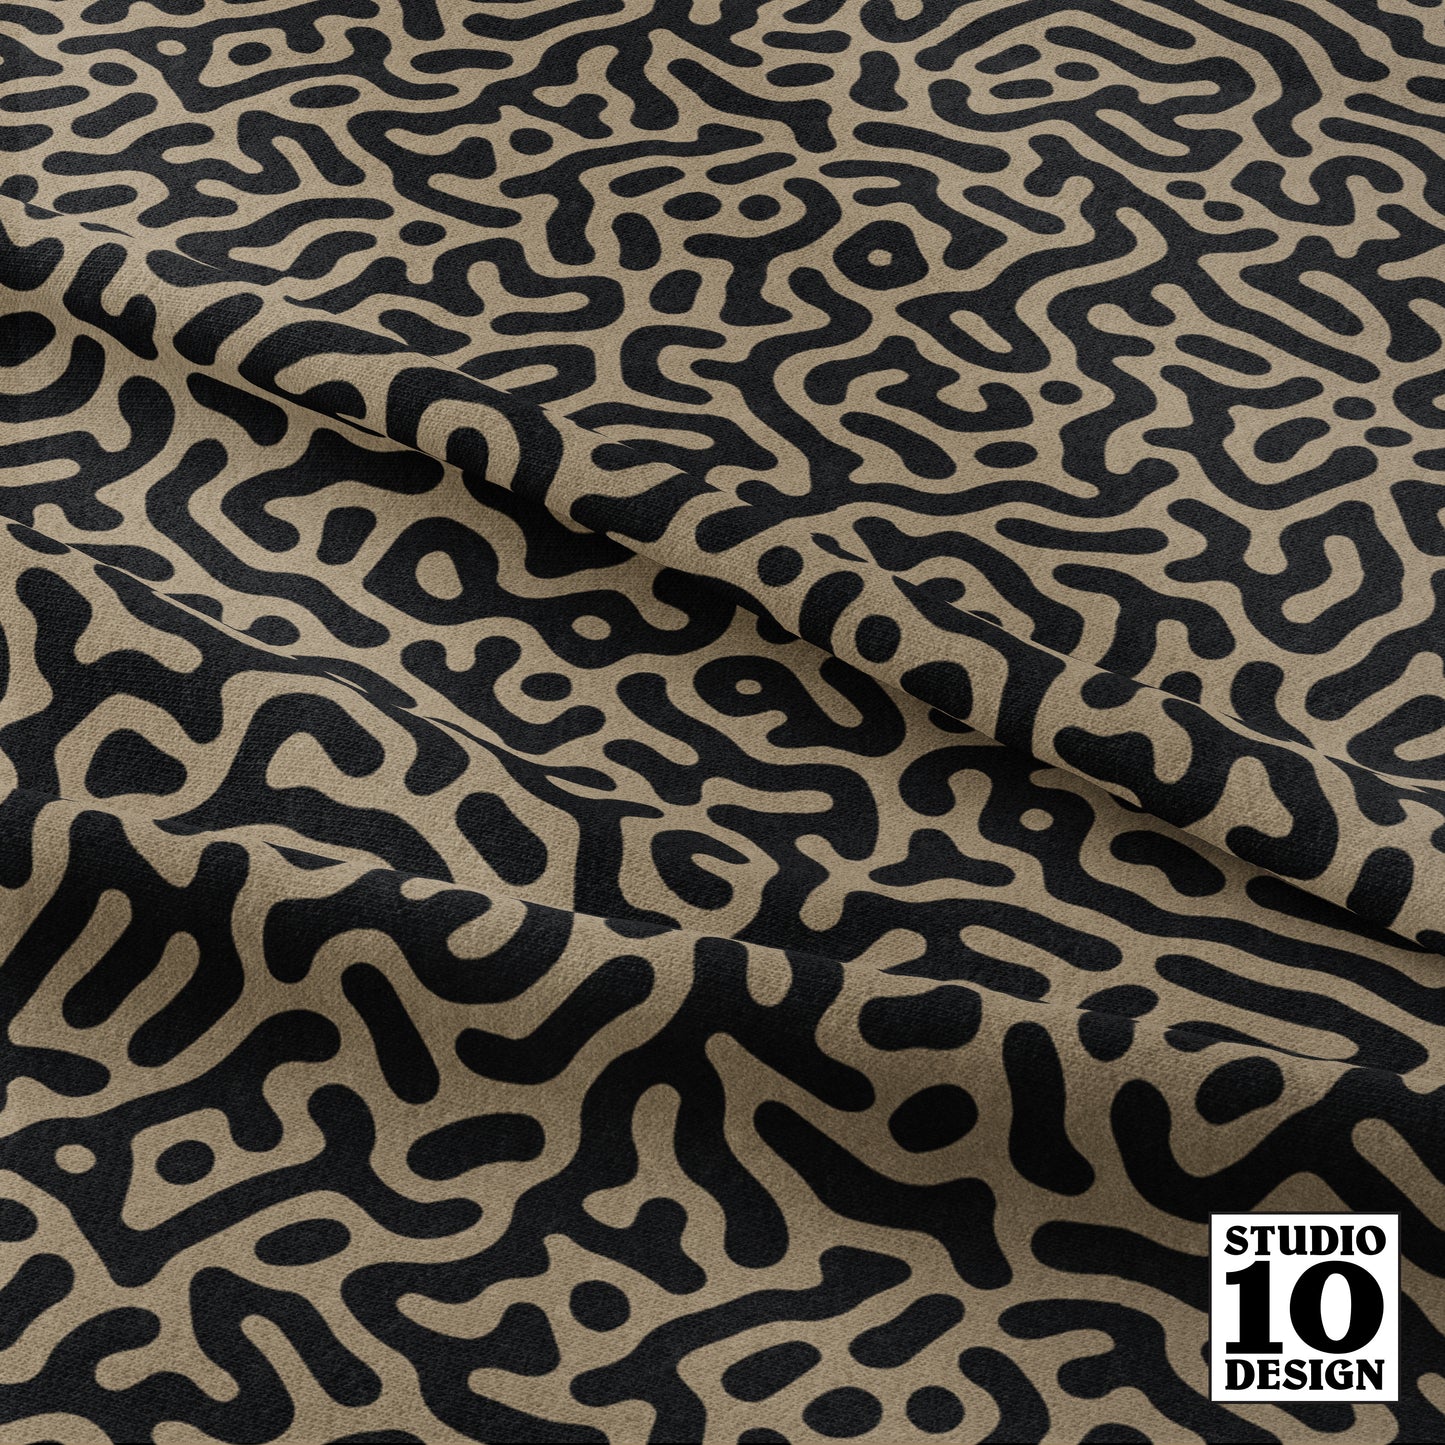 Turing Pattern I: Black + Mushroom Printed Fabric by Studio Ten Design